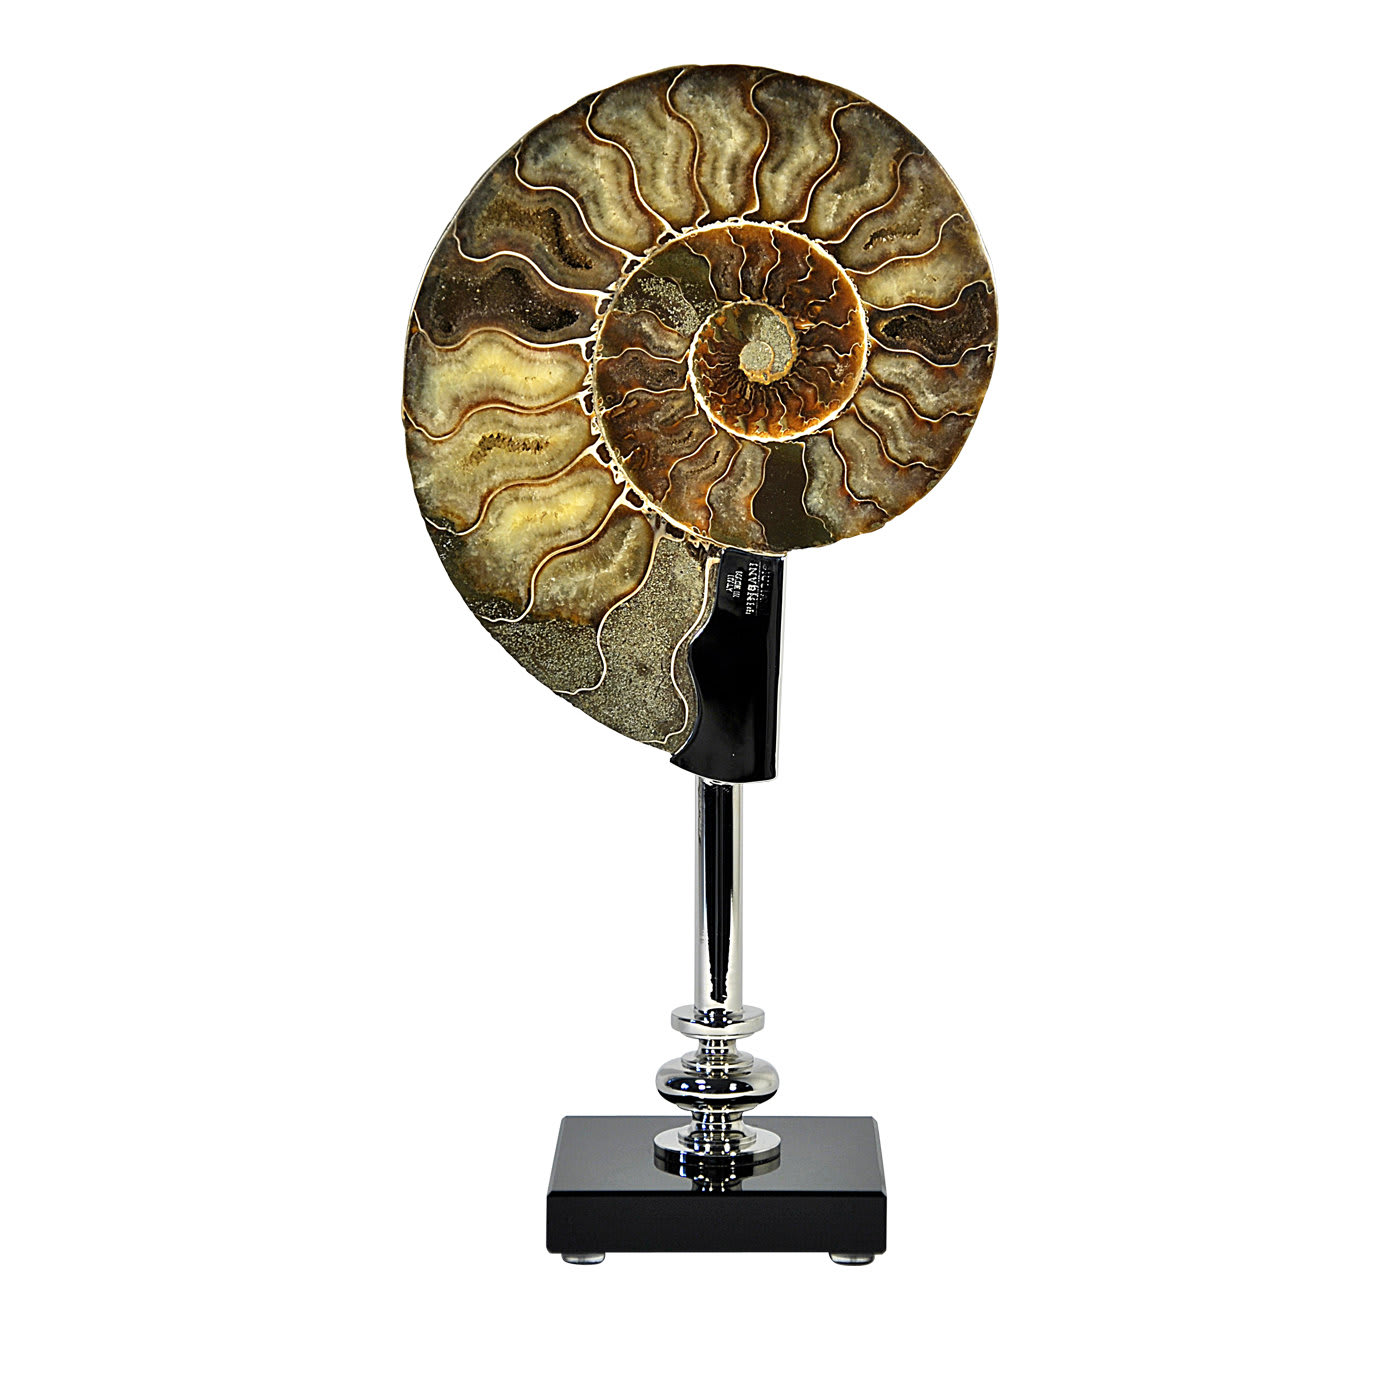 Ammonite on Glass and Nickel-Plated Brass base - Giuliano Tincani